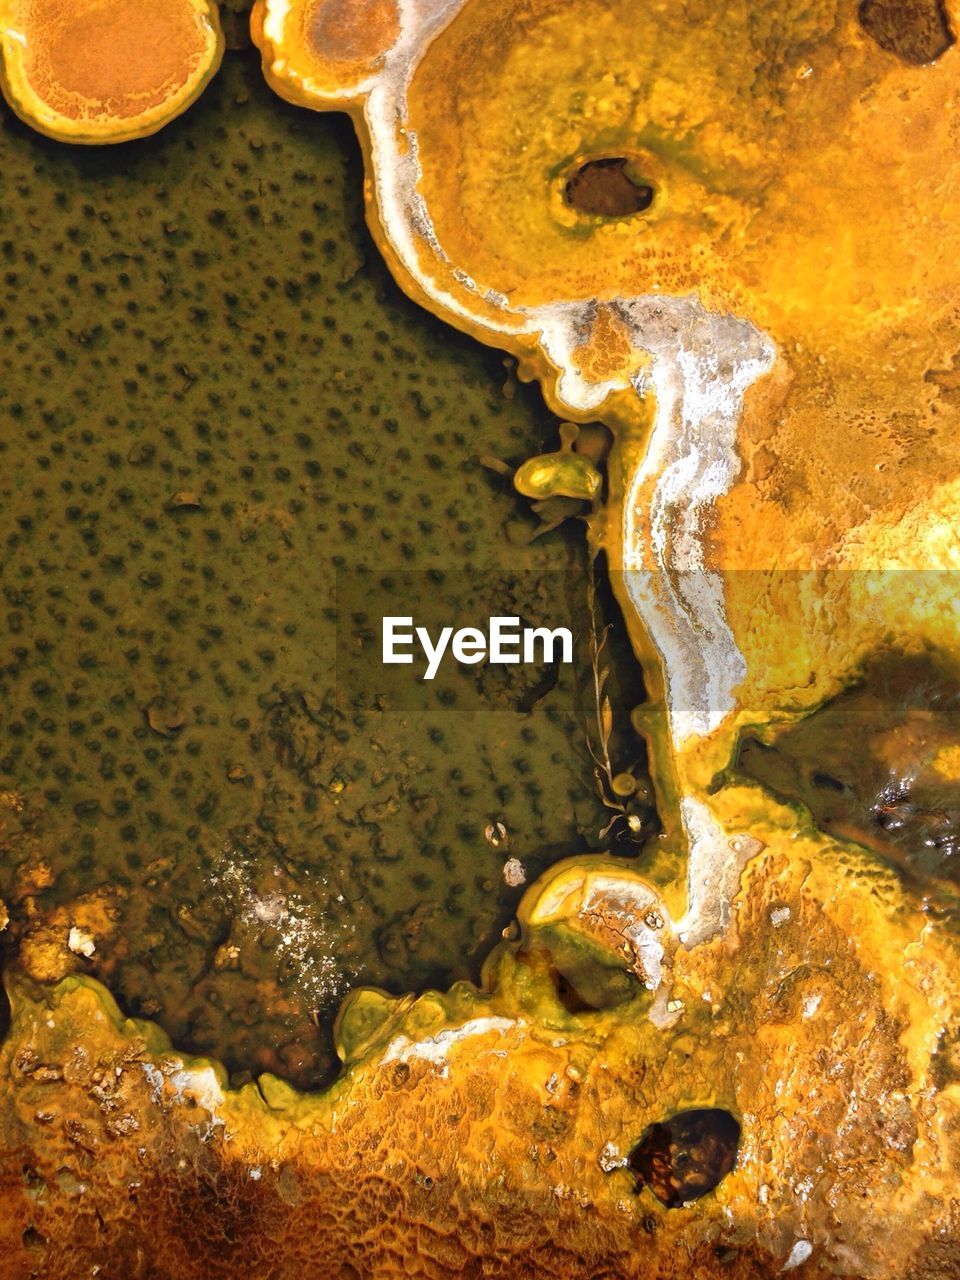 Geyser in yellowstone national park